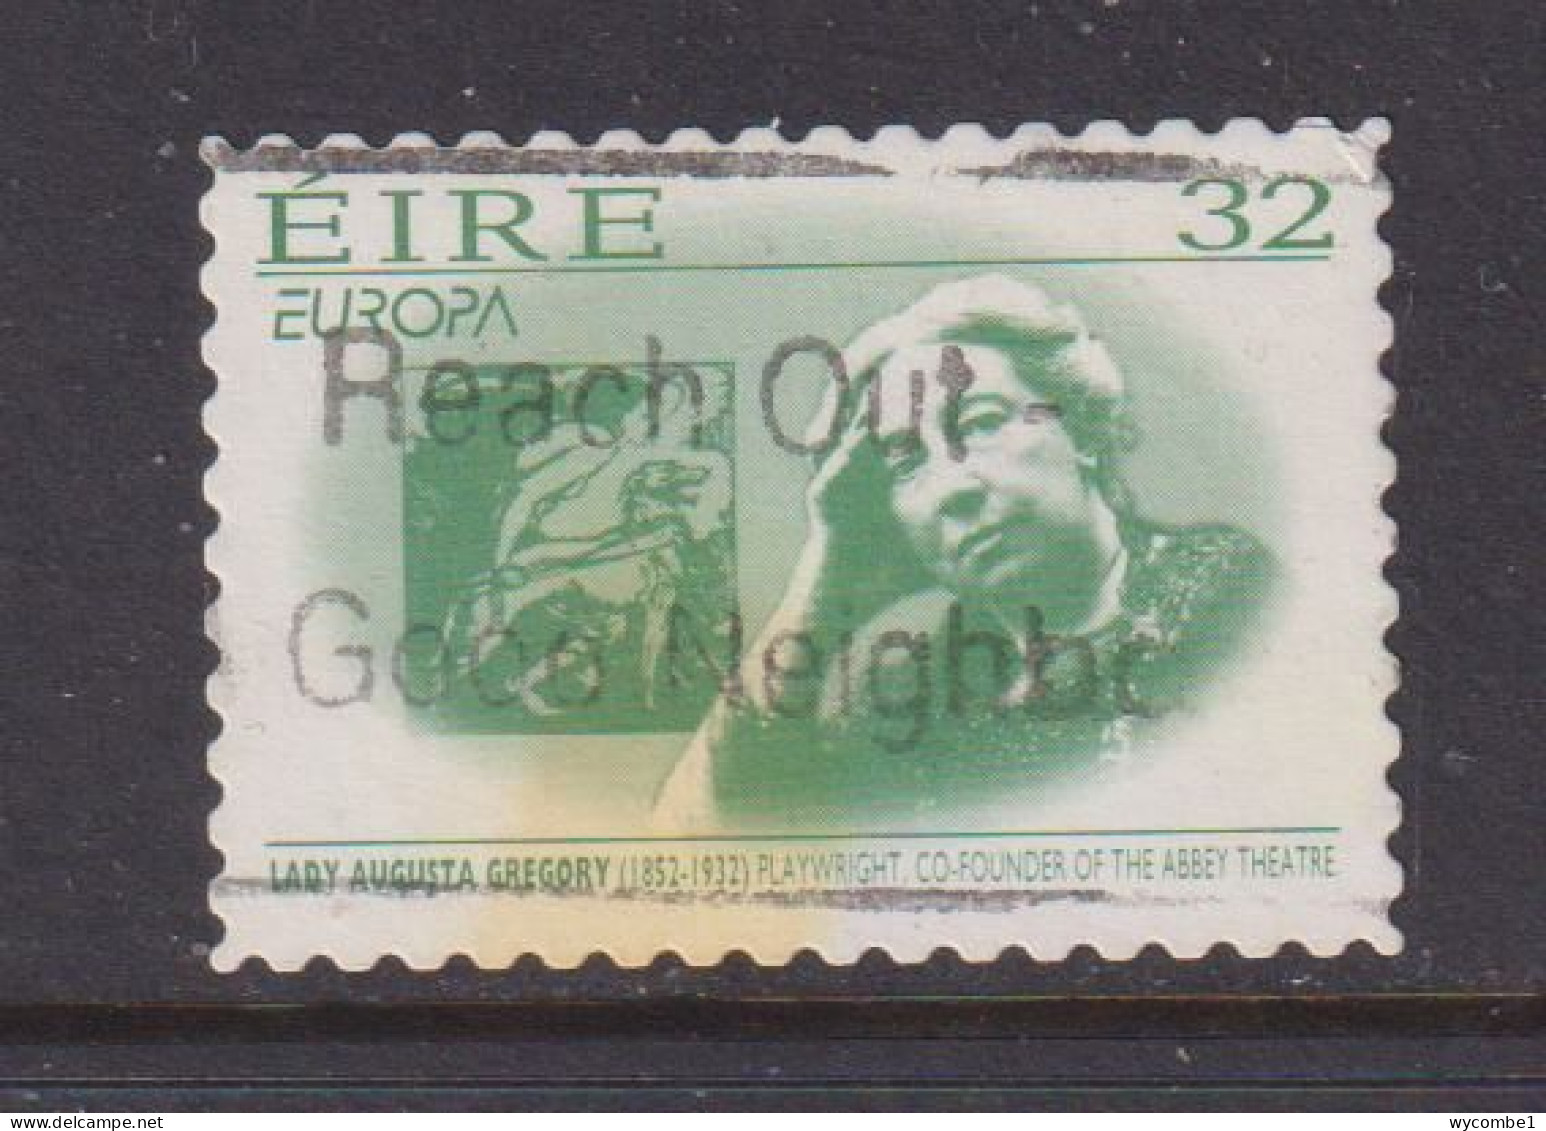 IRELAND - 1996  Europa  32p  Used As Scan - Usados